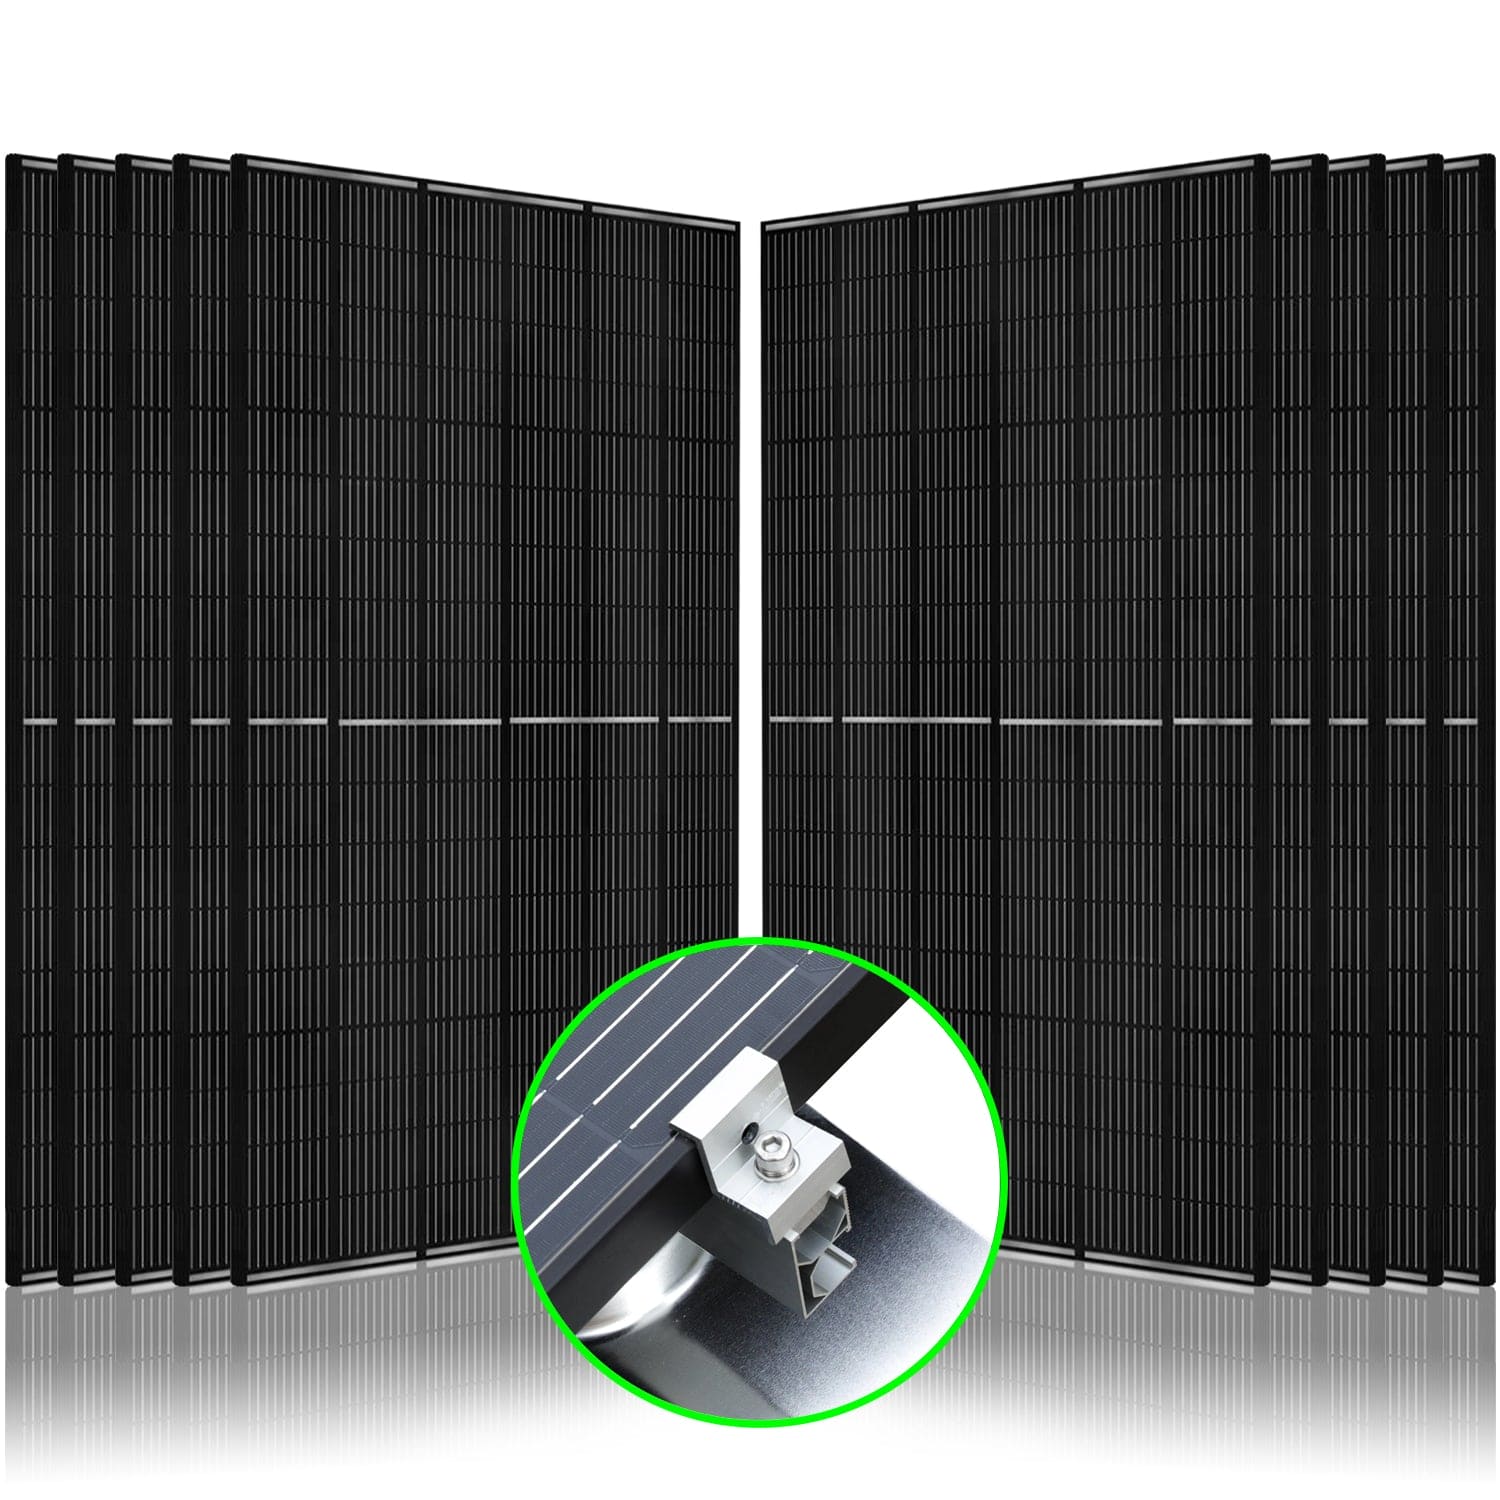 410 Watt Monocrystalline Solar Panel (10 Packs) With Solar Panel Mount Rack